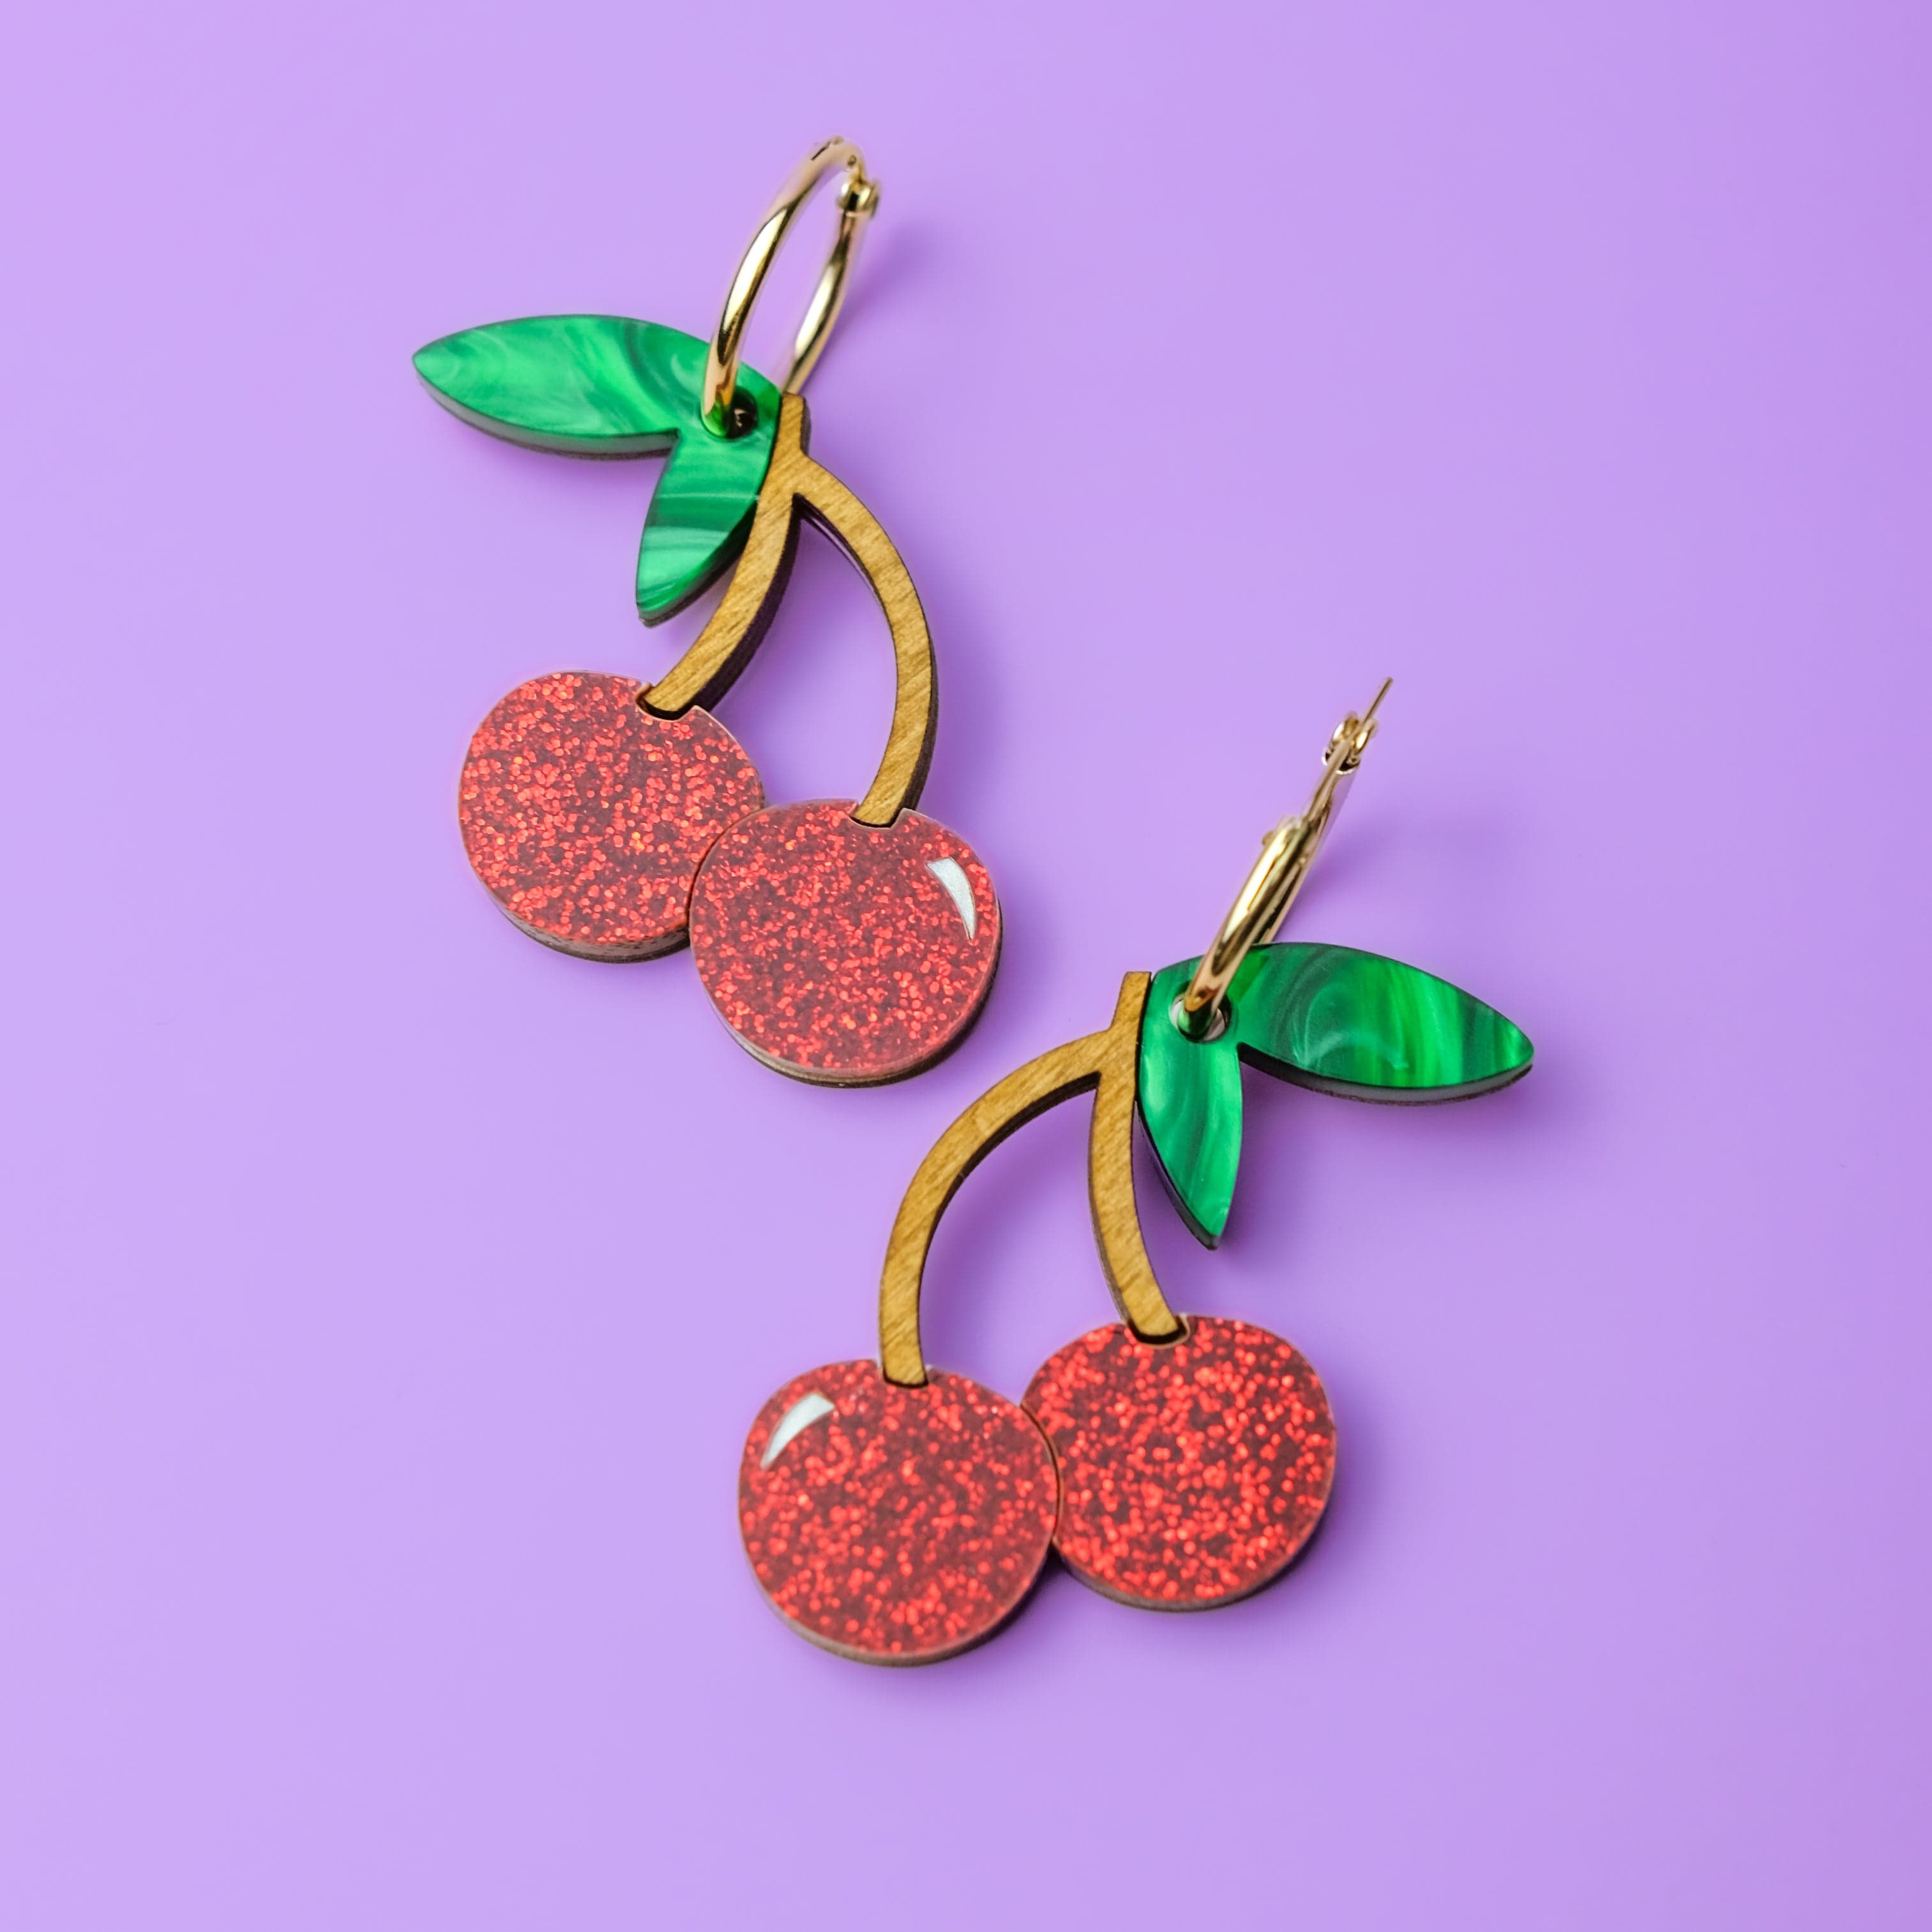 Cherry dangly lightweight statement hoop earrings, gold-filled